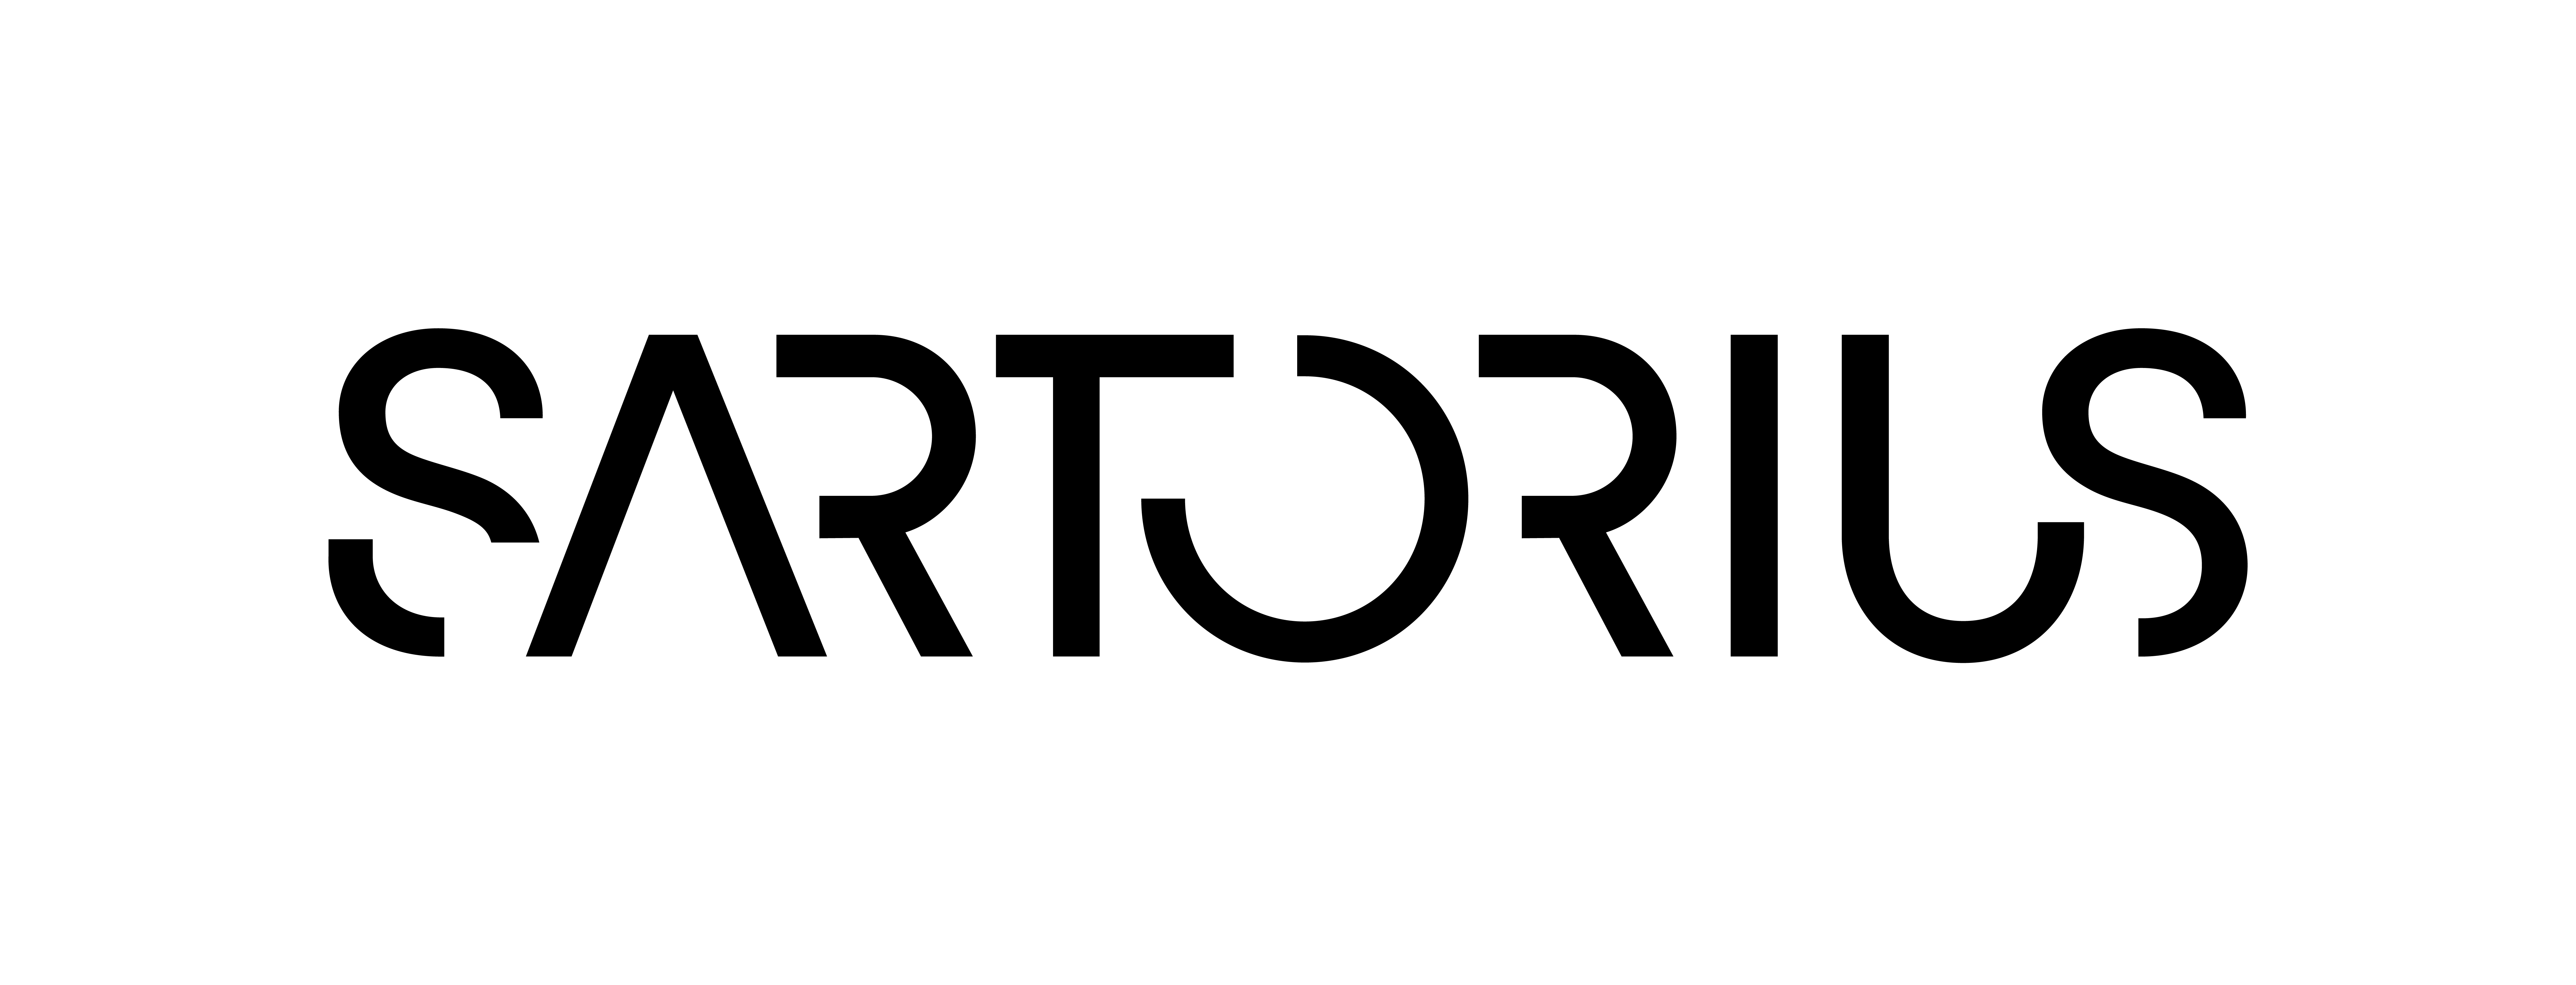 sartorius logo rgb 300dpi